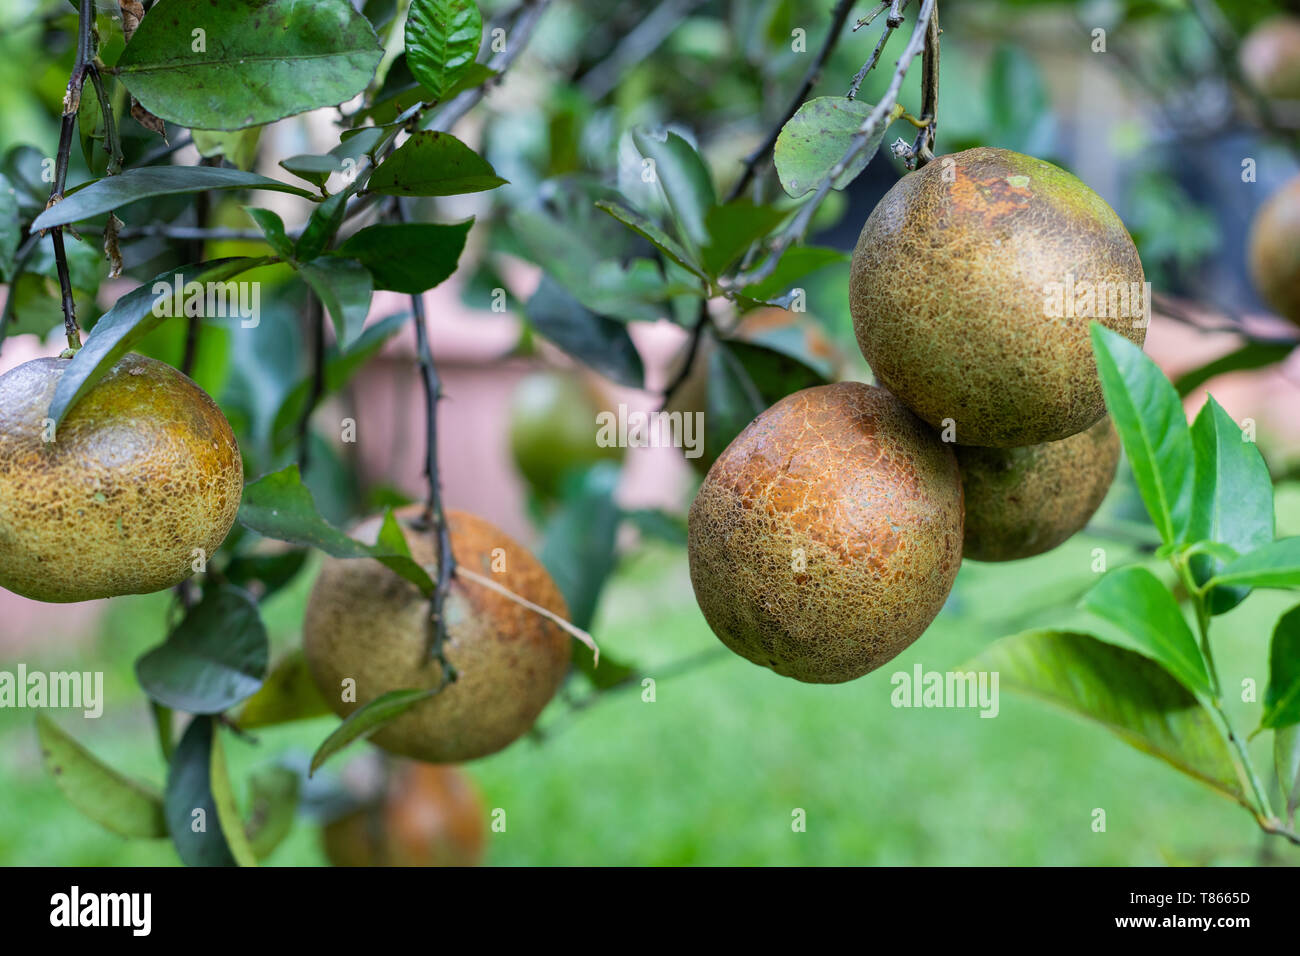 Organic Lemonade fruit (citrus limon x reticulata) with a discoloured skin condition in an Australian backyard garden Stock Photo